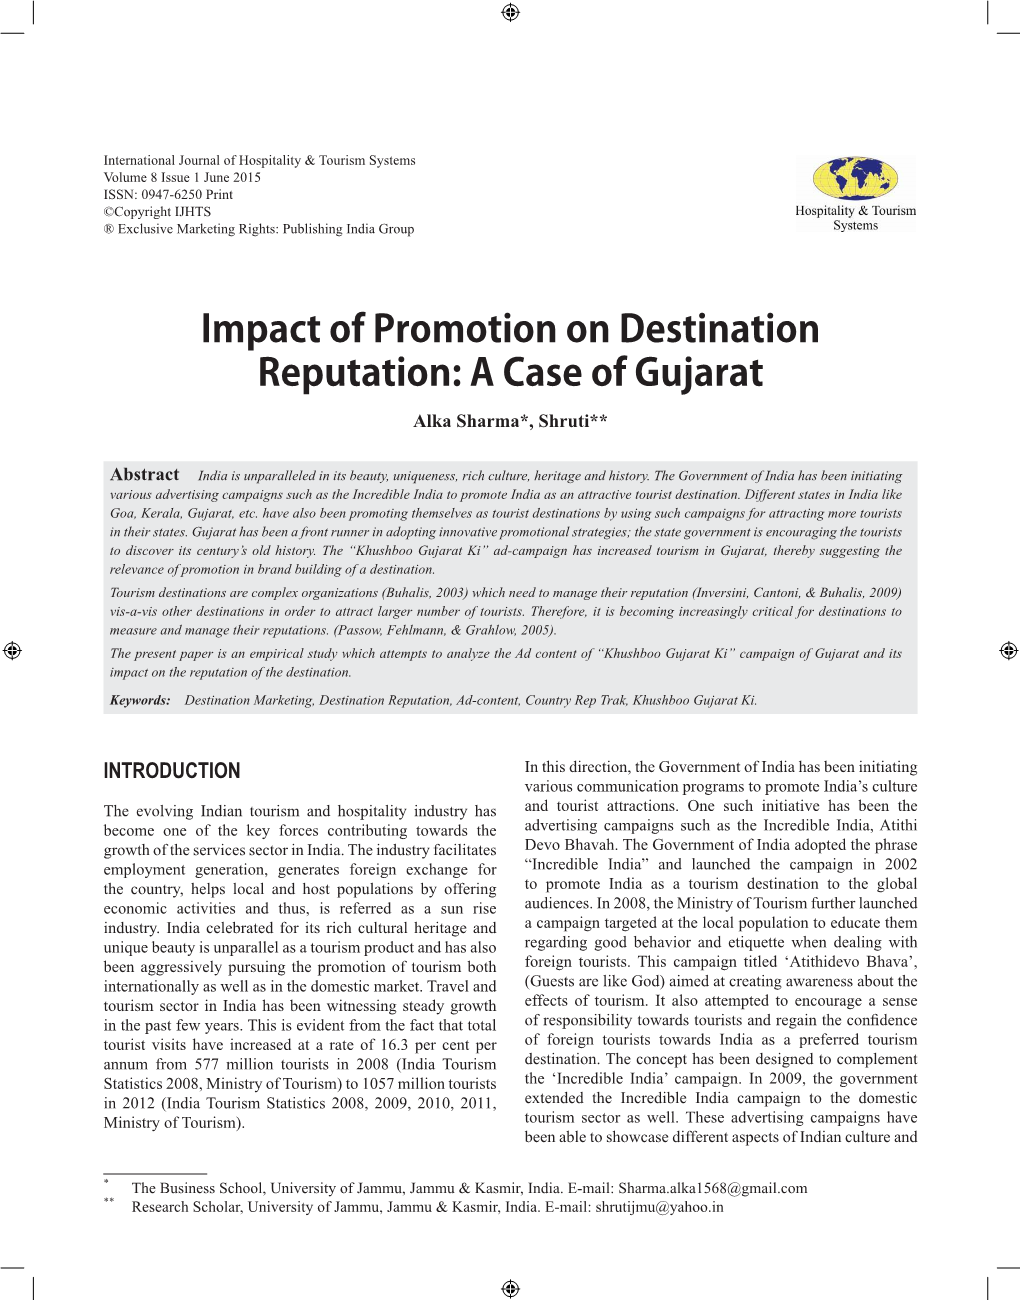 Impact of Promotion on Destination Reputation: a Case of Gujarat Alka Sharma*, Shruti**